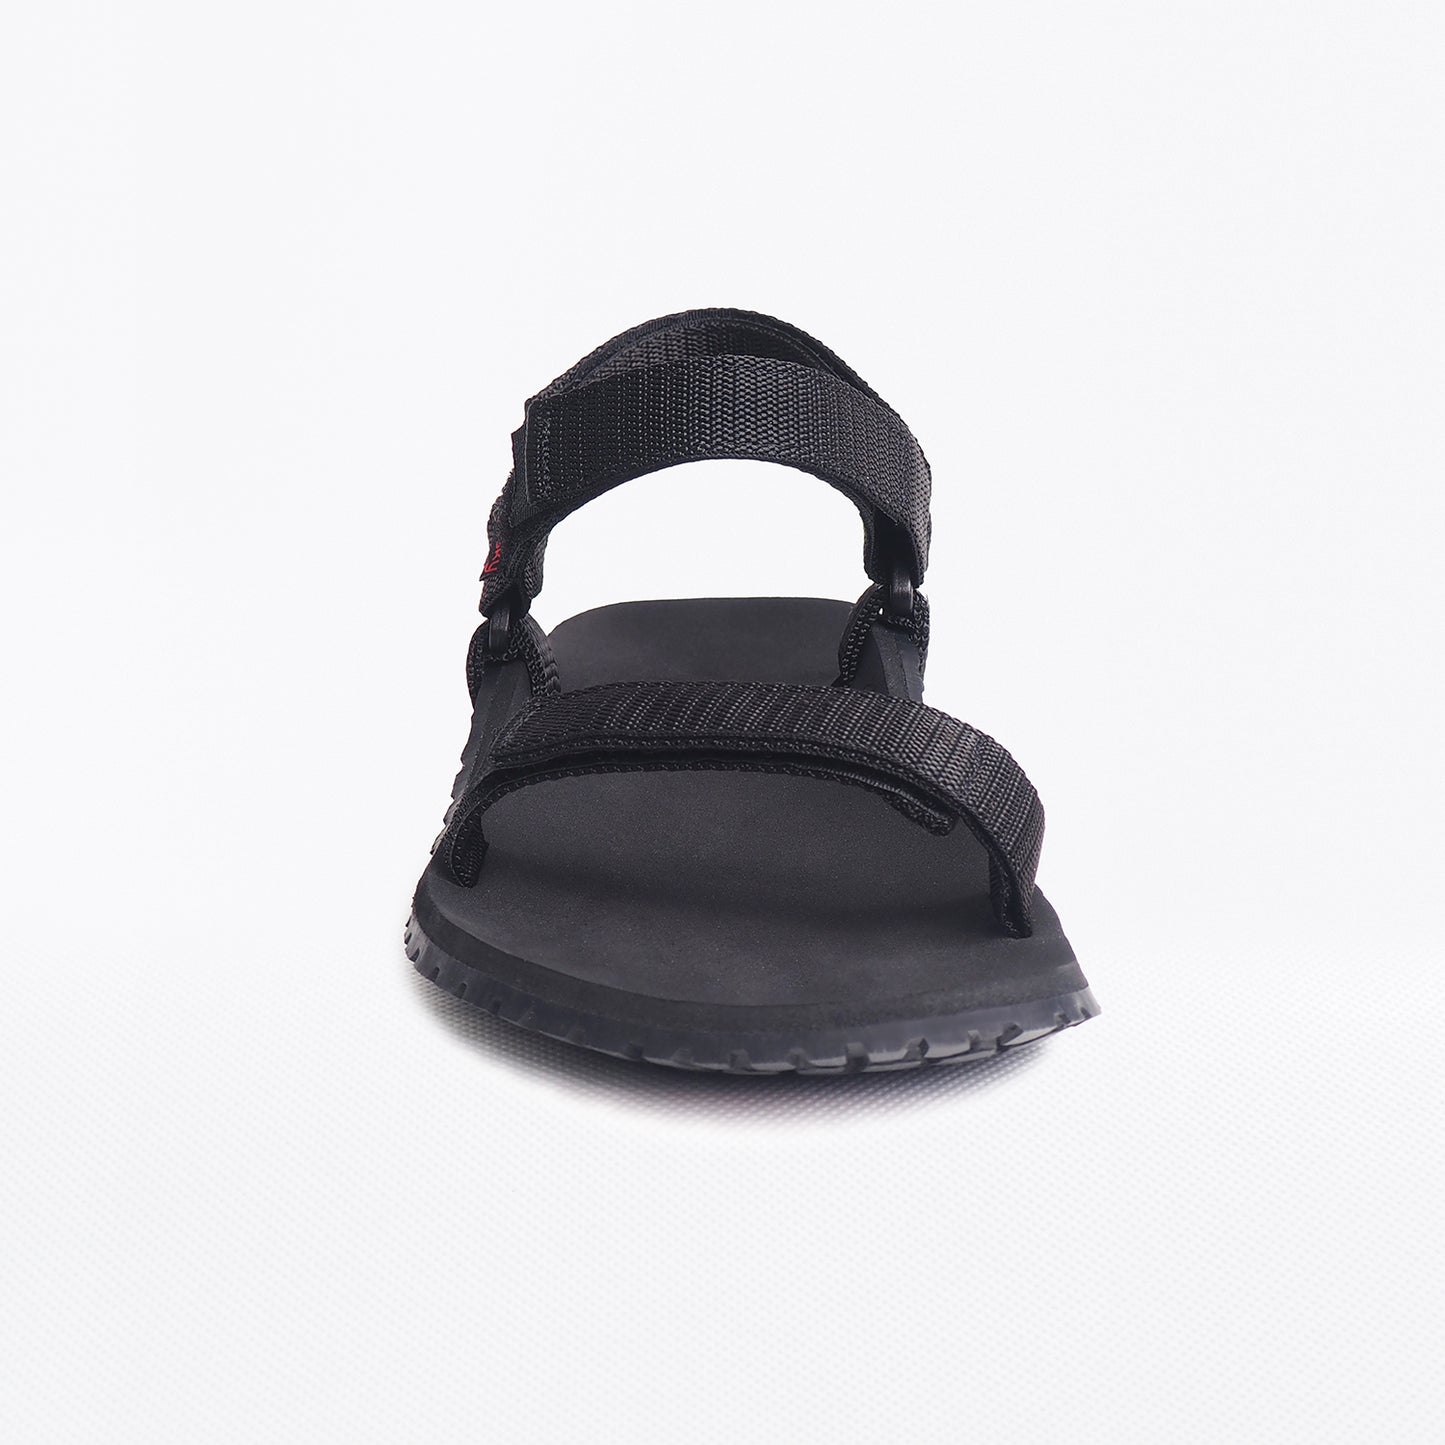 Bosky Enduro 2.0 X Sandals